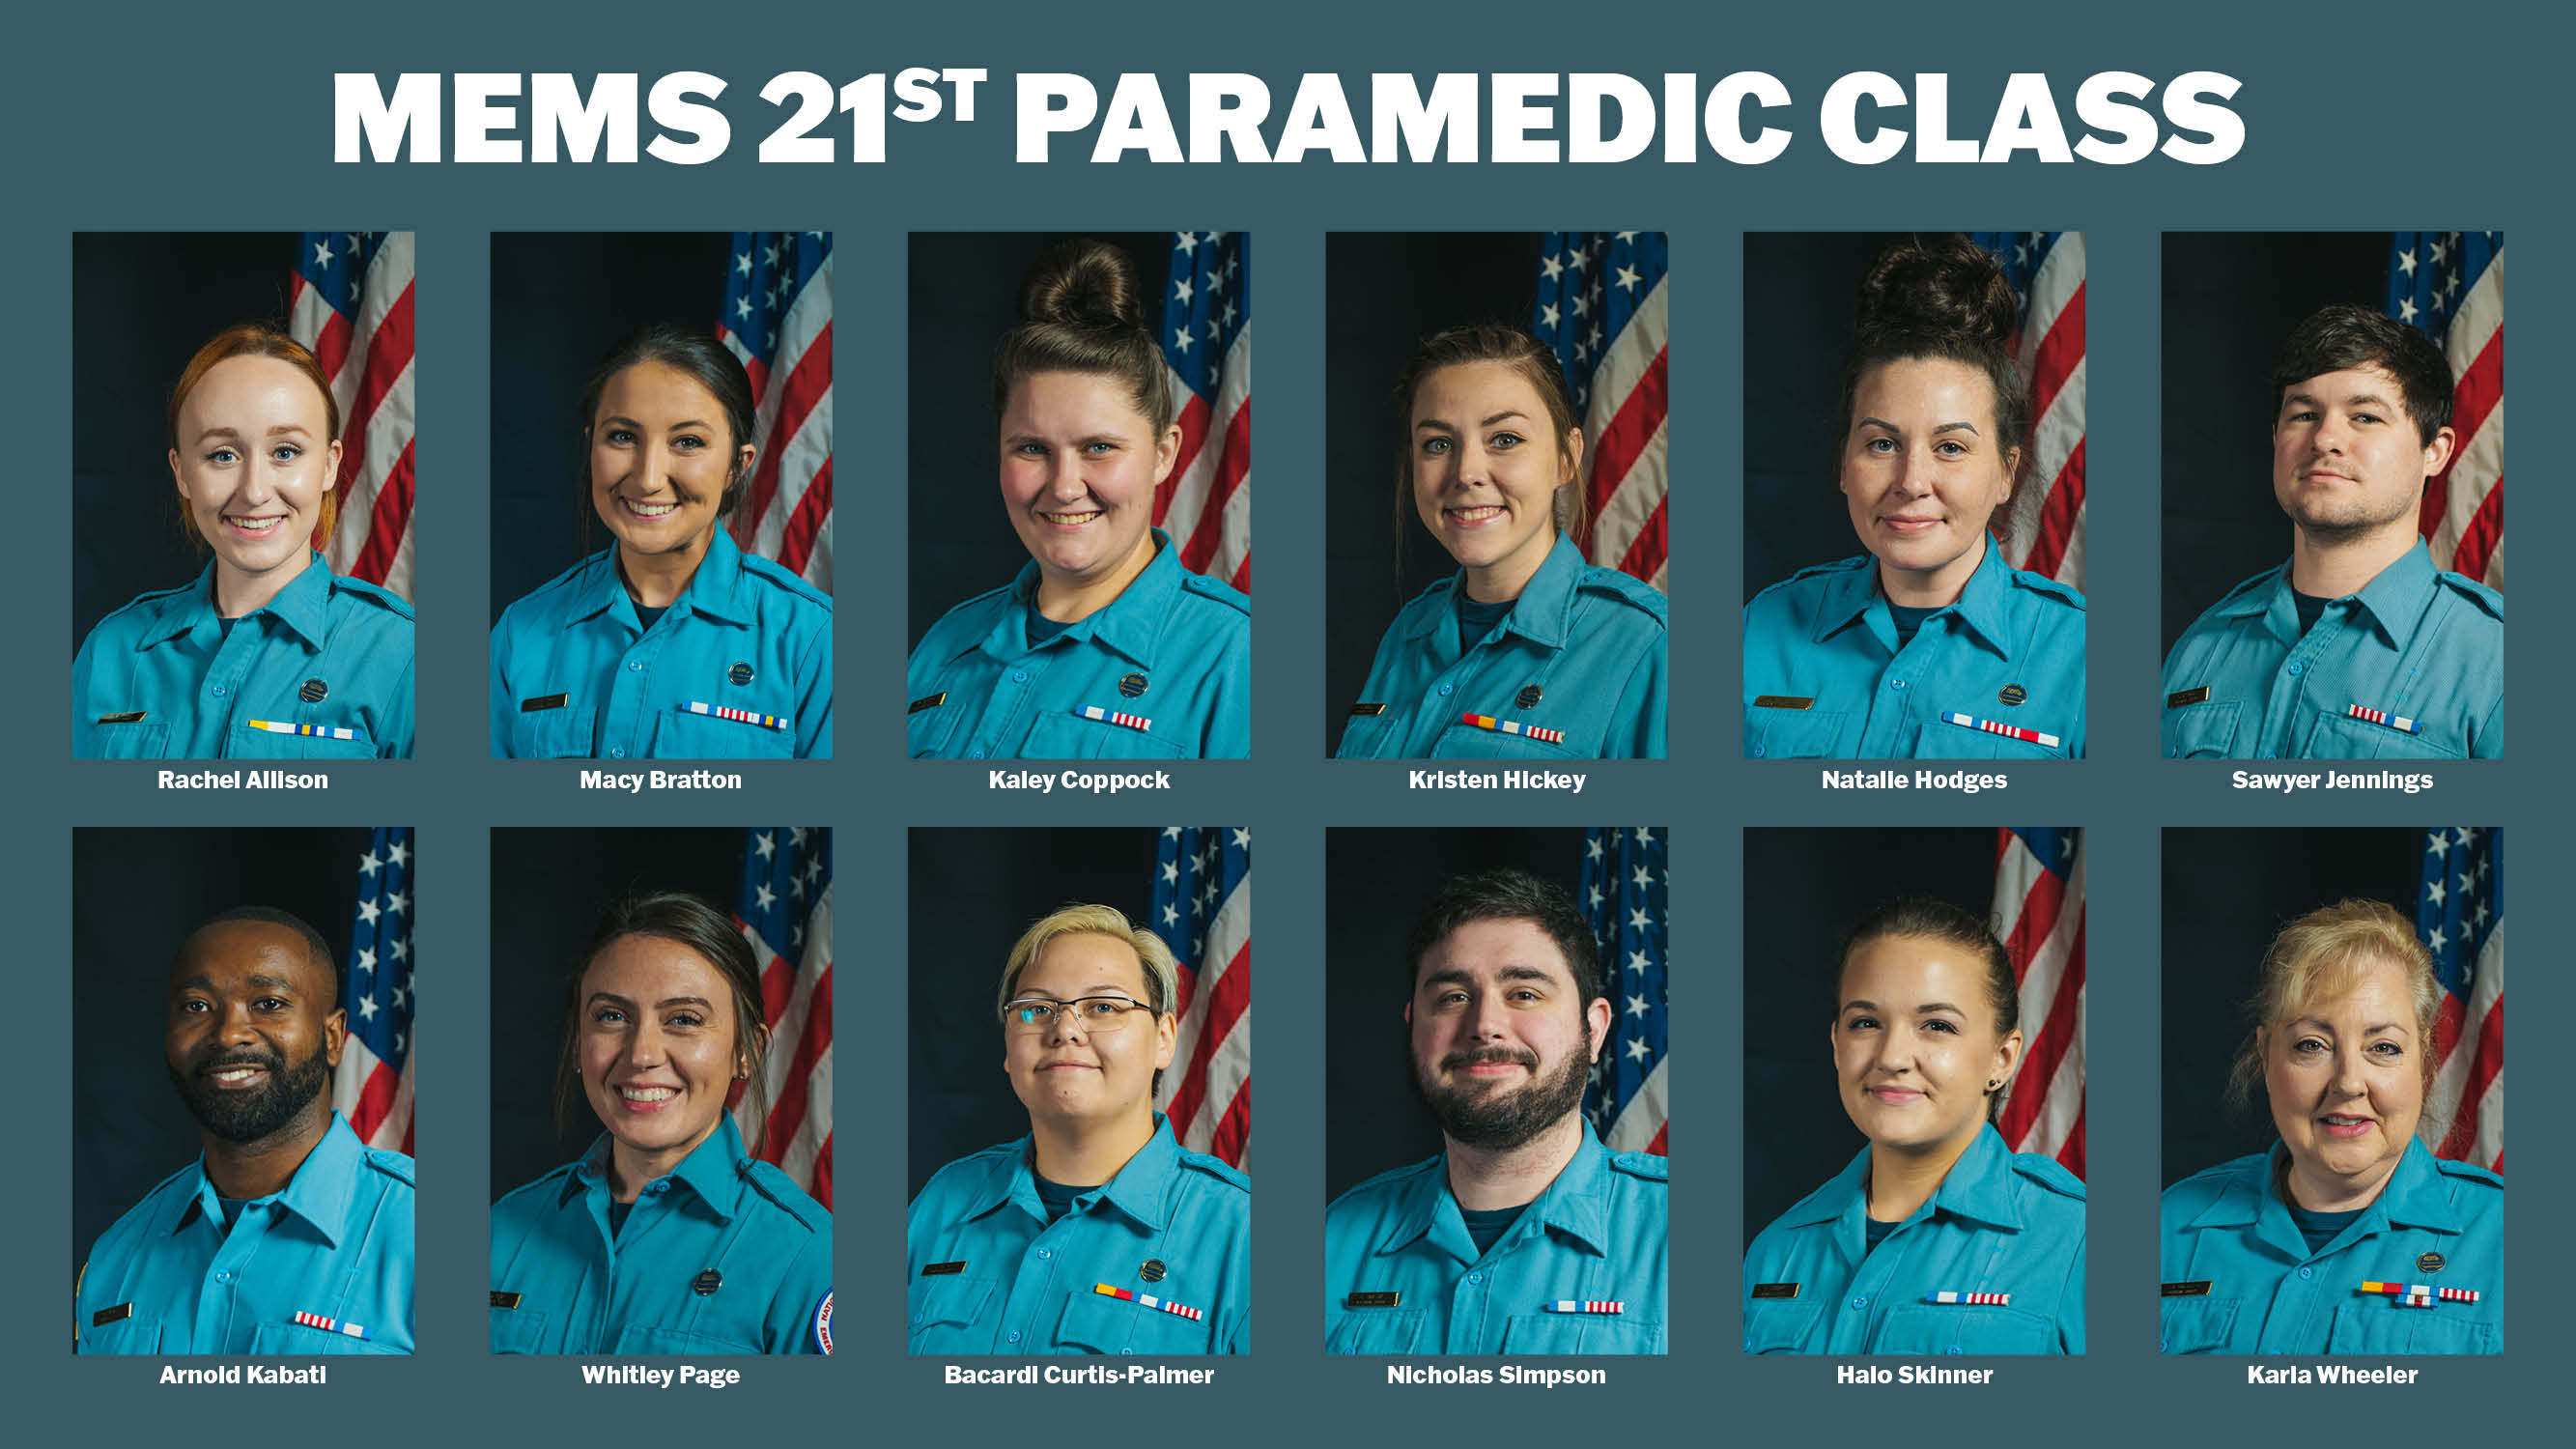 12 Start in 21st MEMS Paramedic School